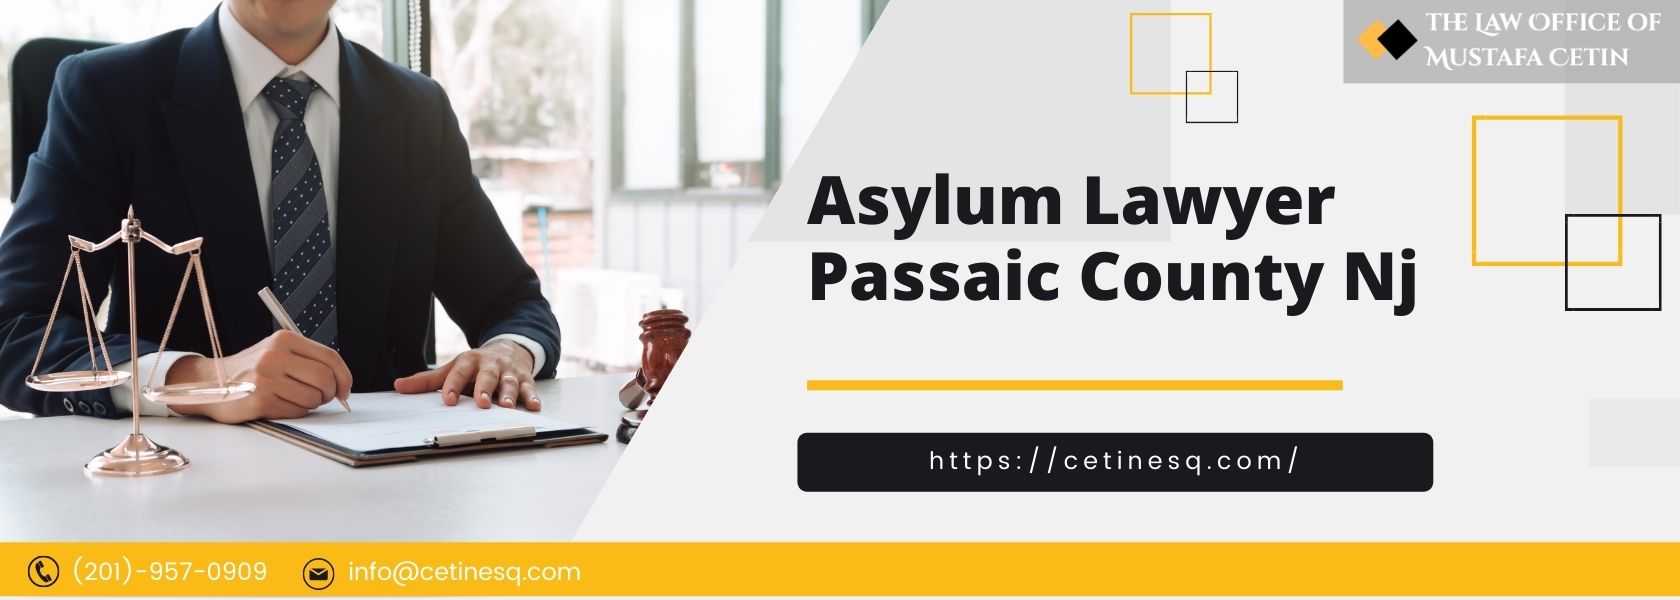 seeking asylum - Lawyer - Asylum Lawyer Passaic County Nj